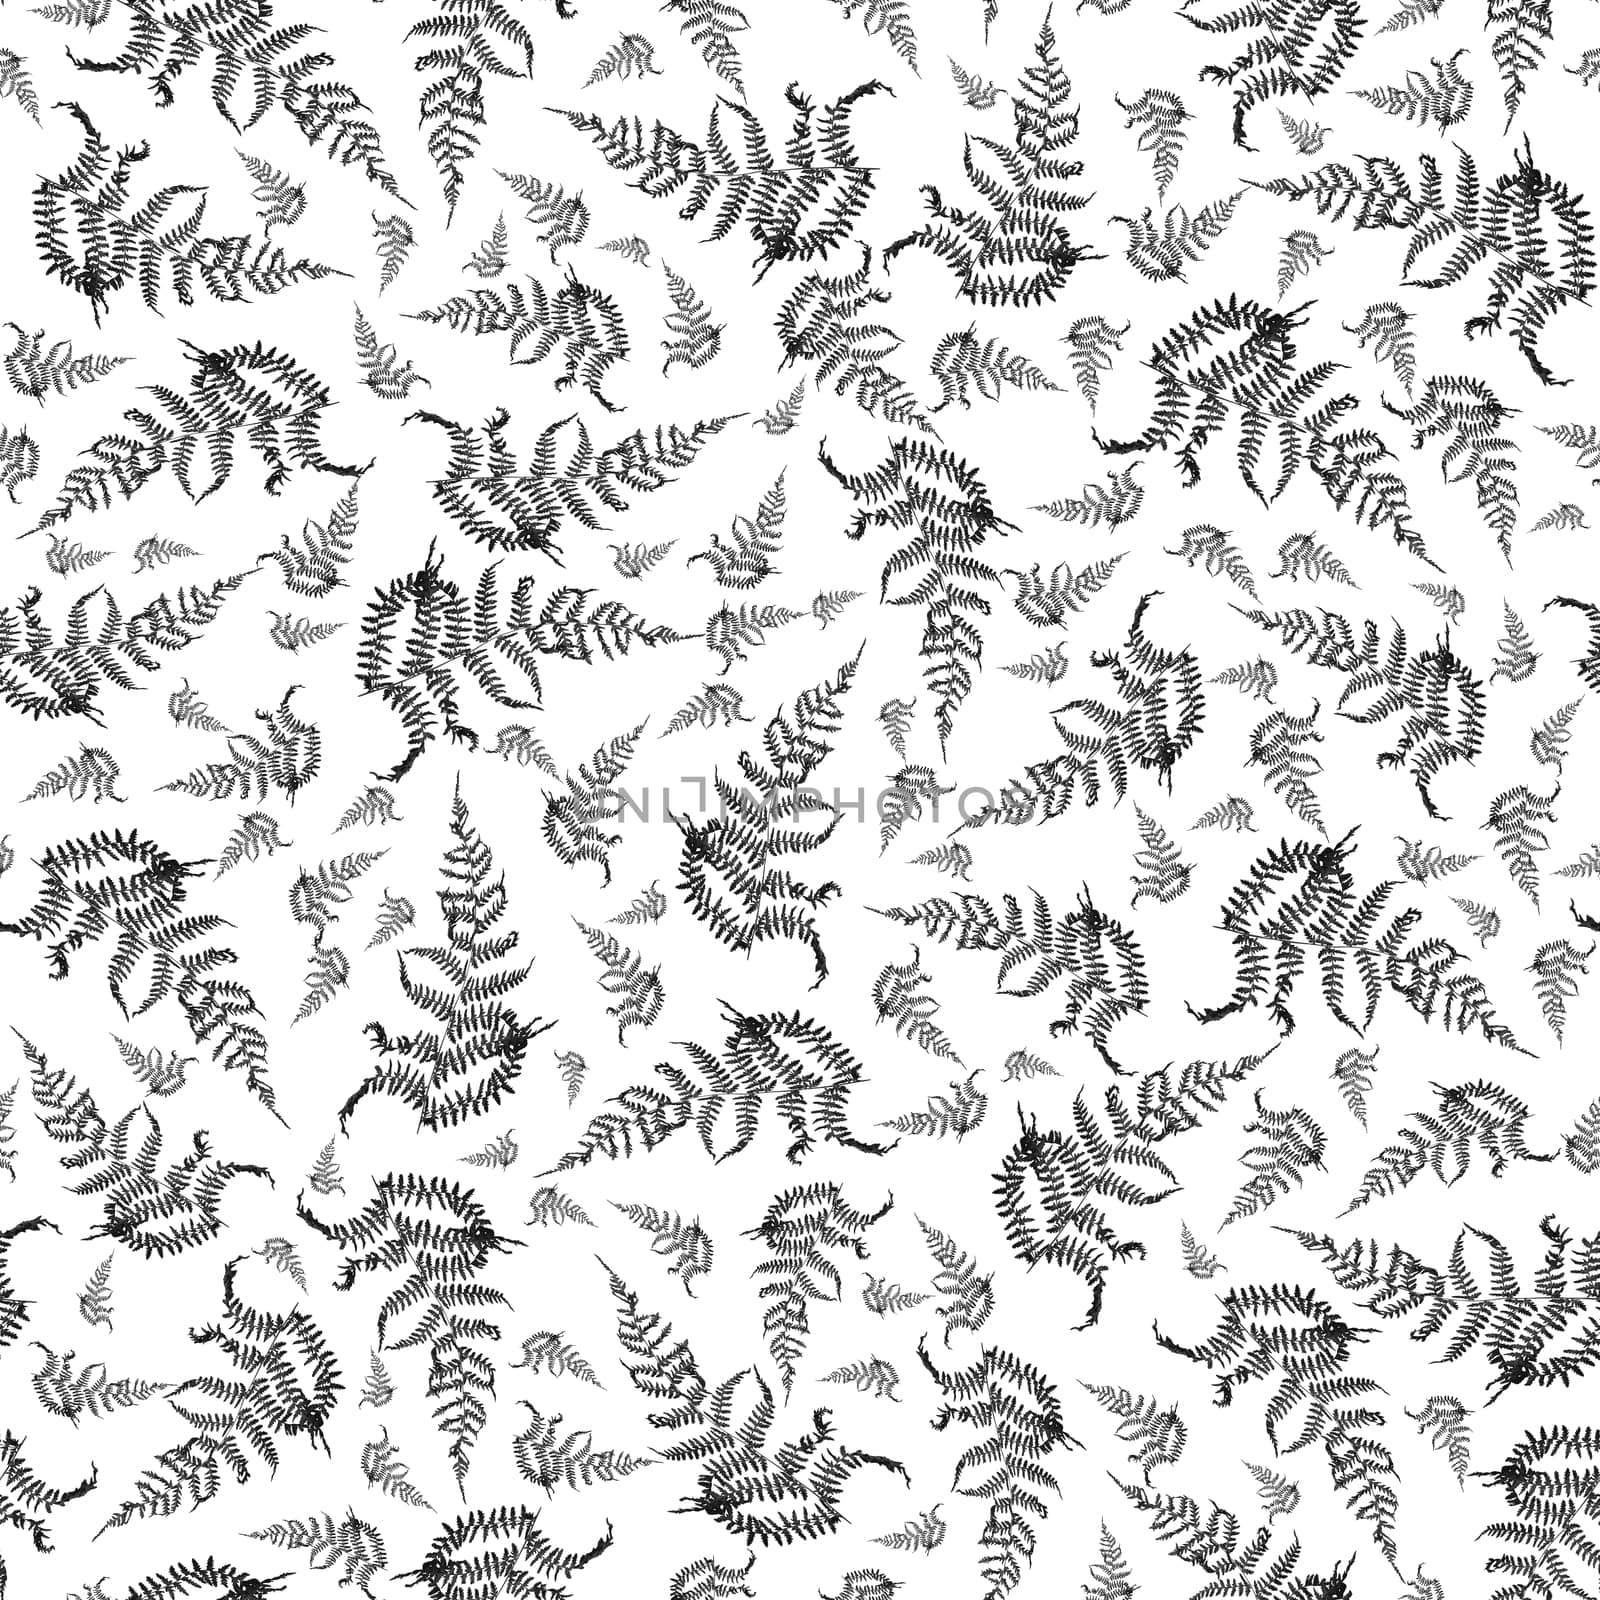 ornate seamless black and white modern repeating fern background design